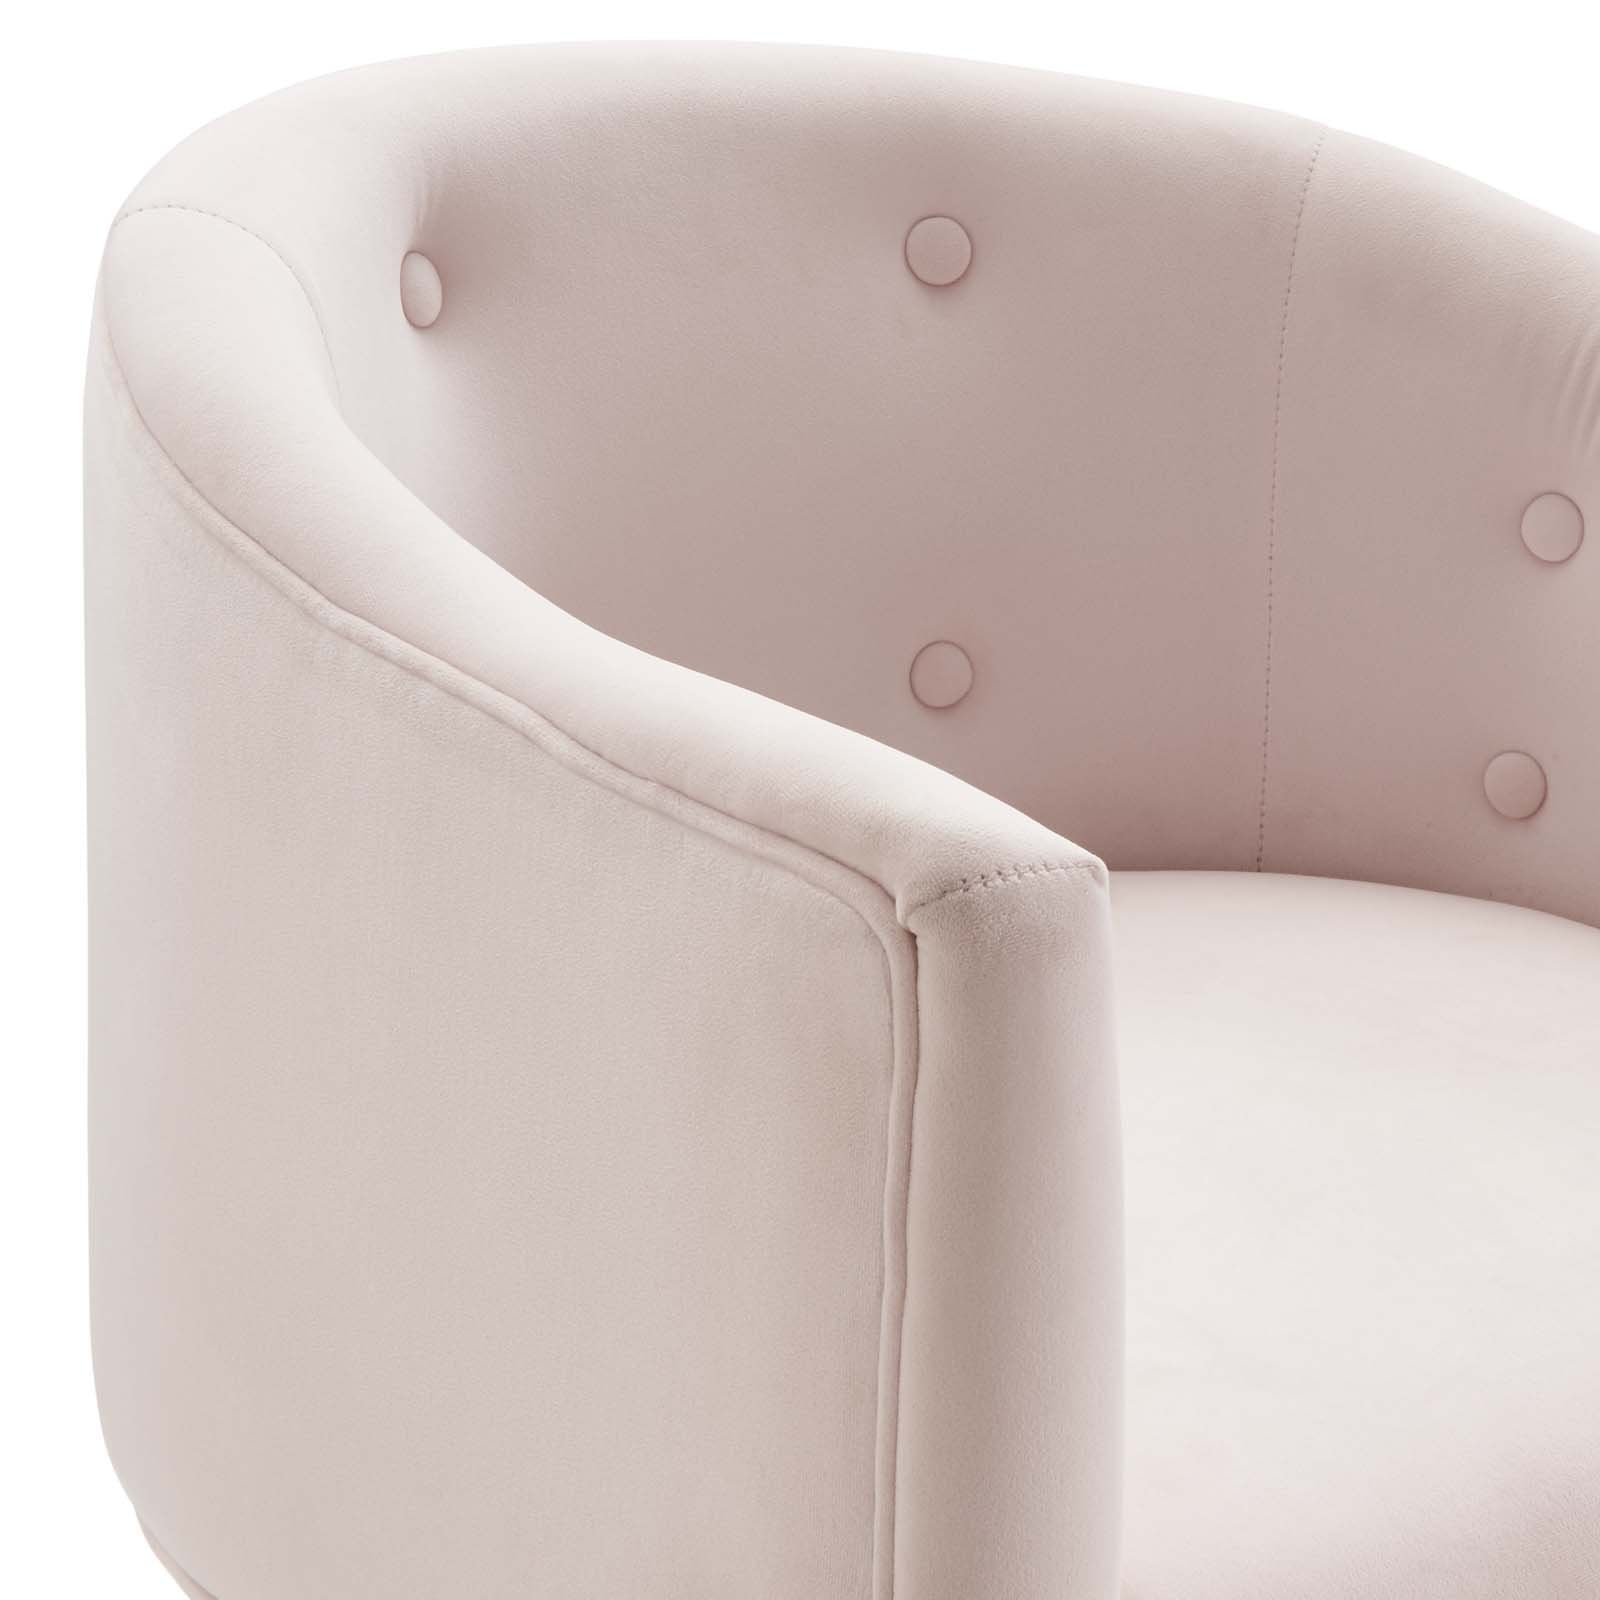 Savour Tufted Performance Velvet Accent Chair - East Shore Modern Home Furnishings